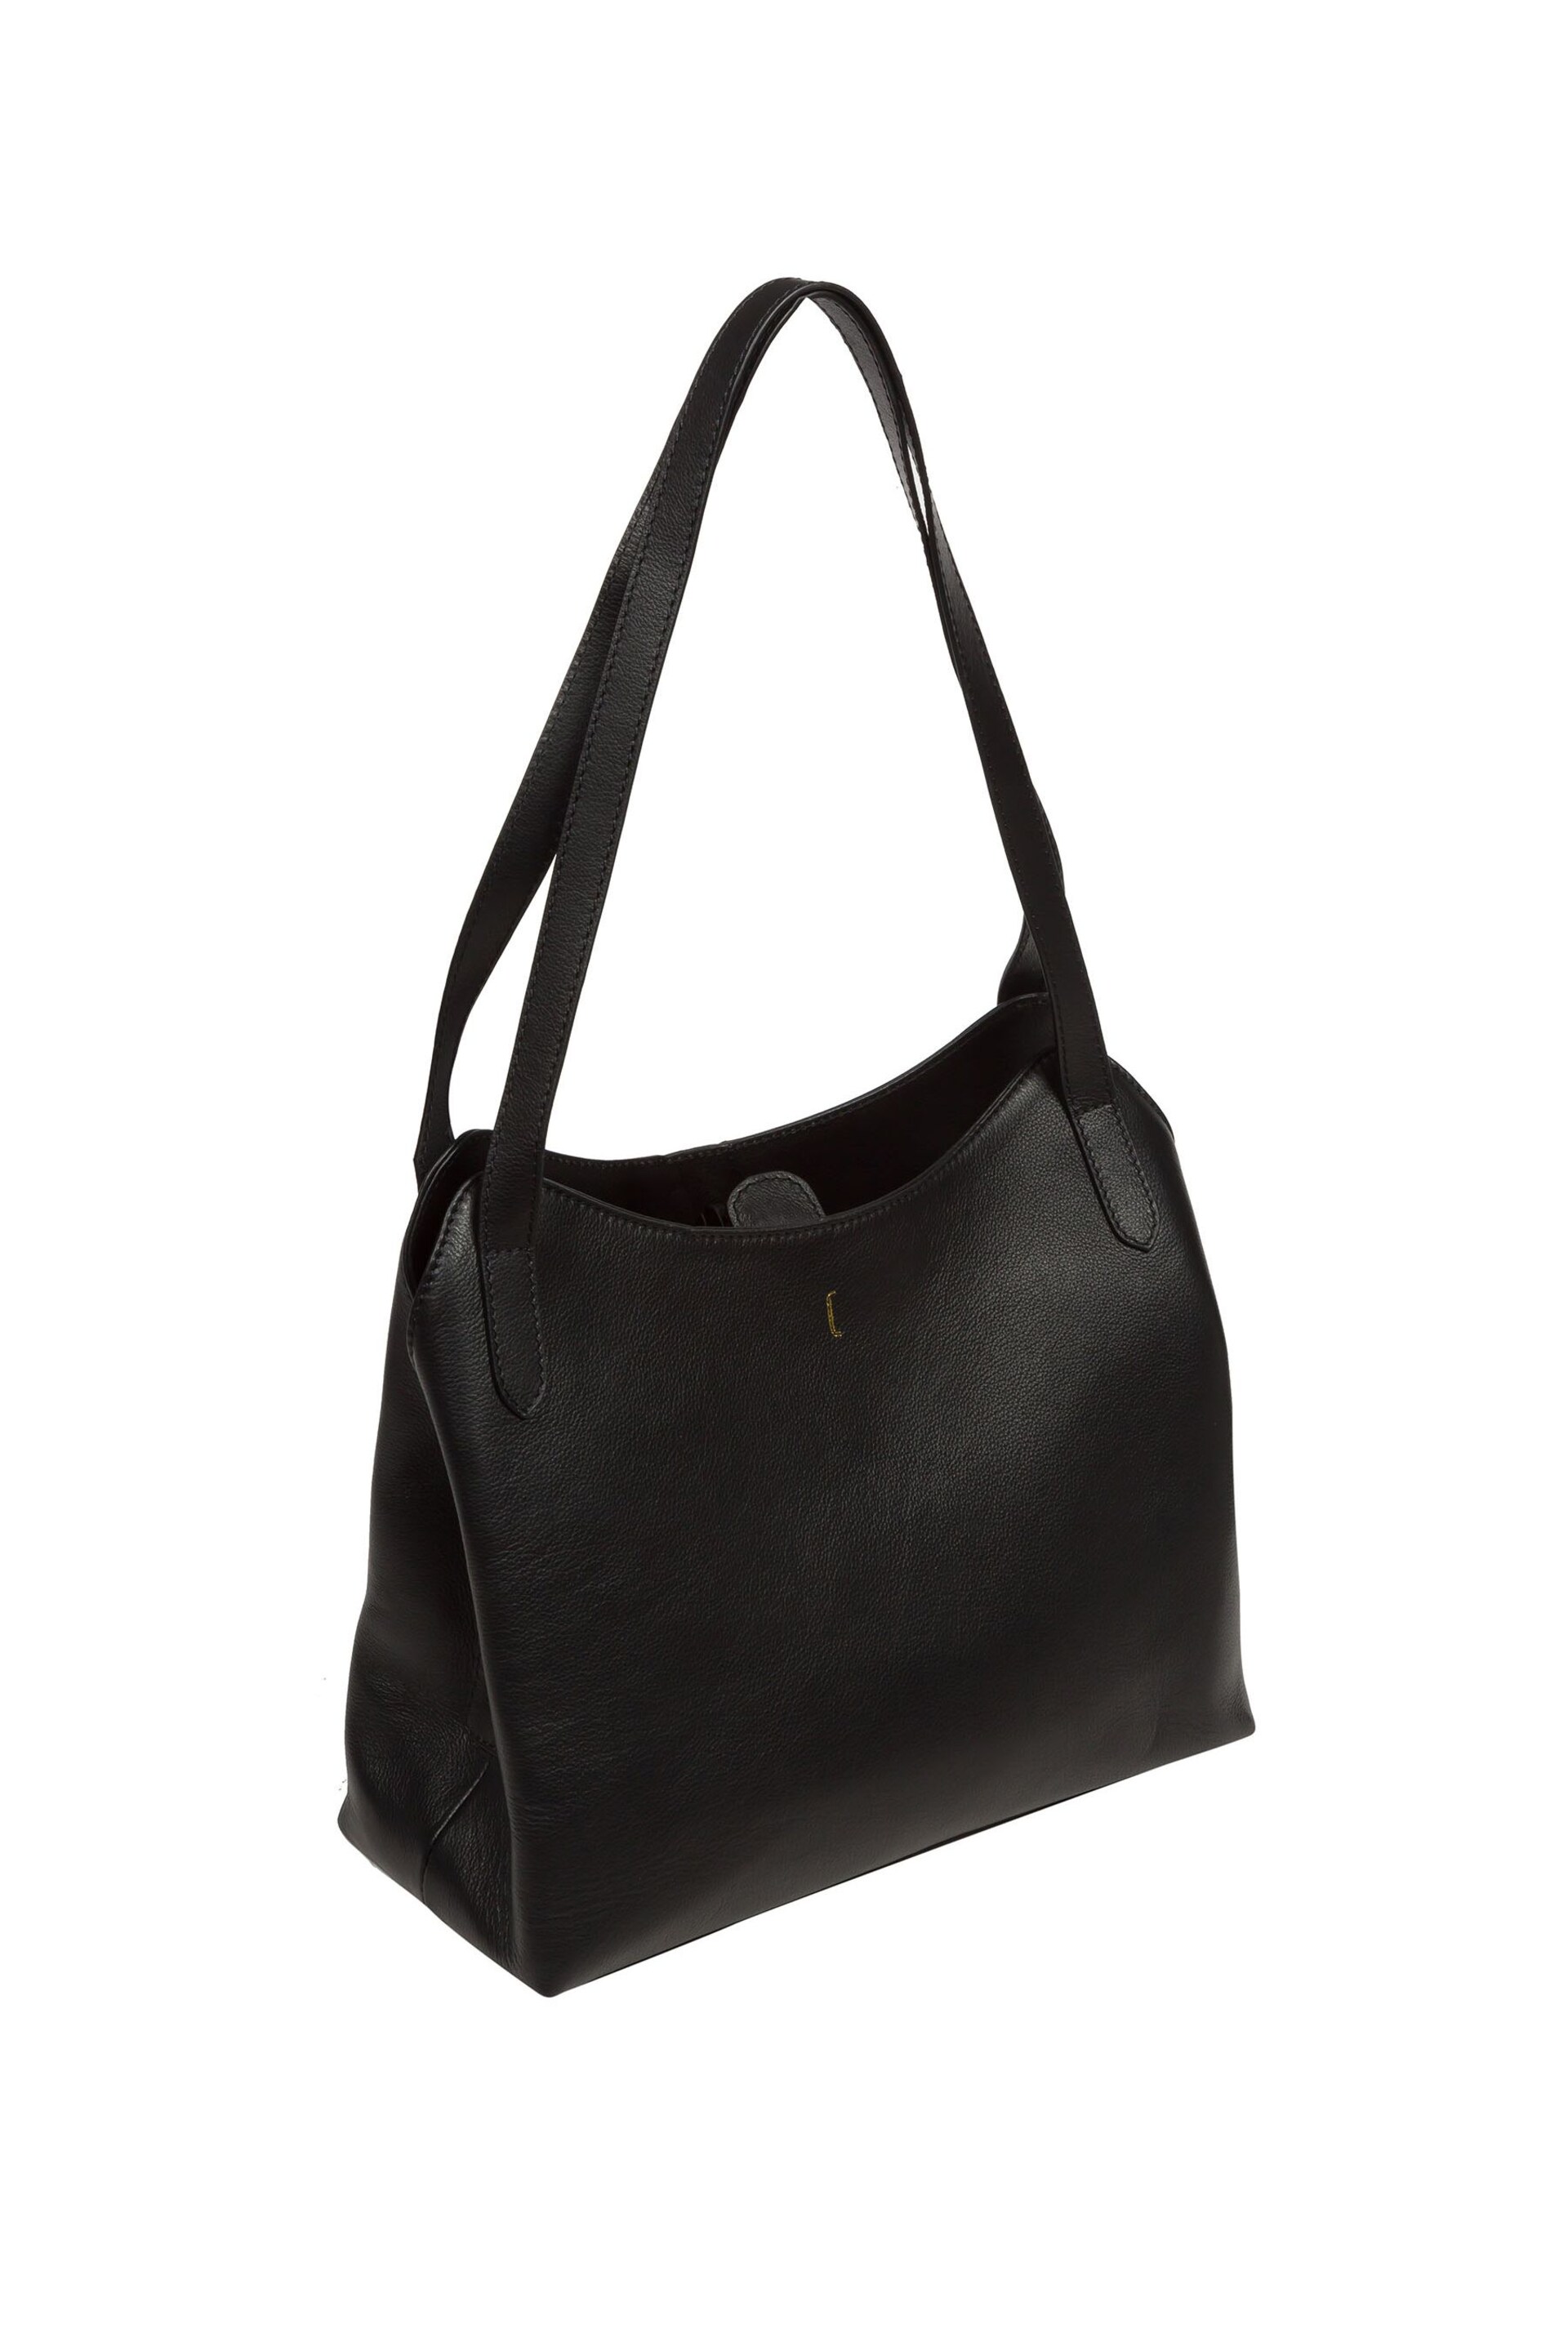 Cultured London Arabella Leather Handbag - Image 6 of 6